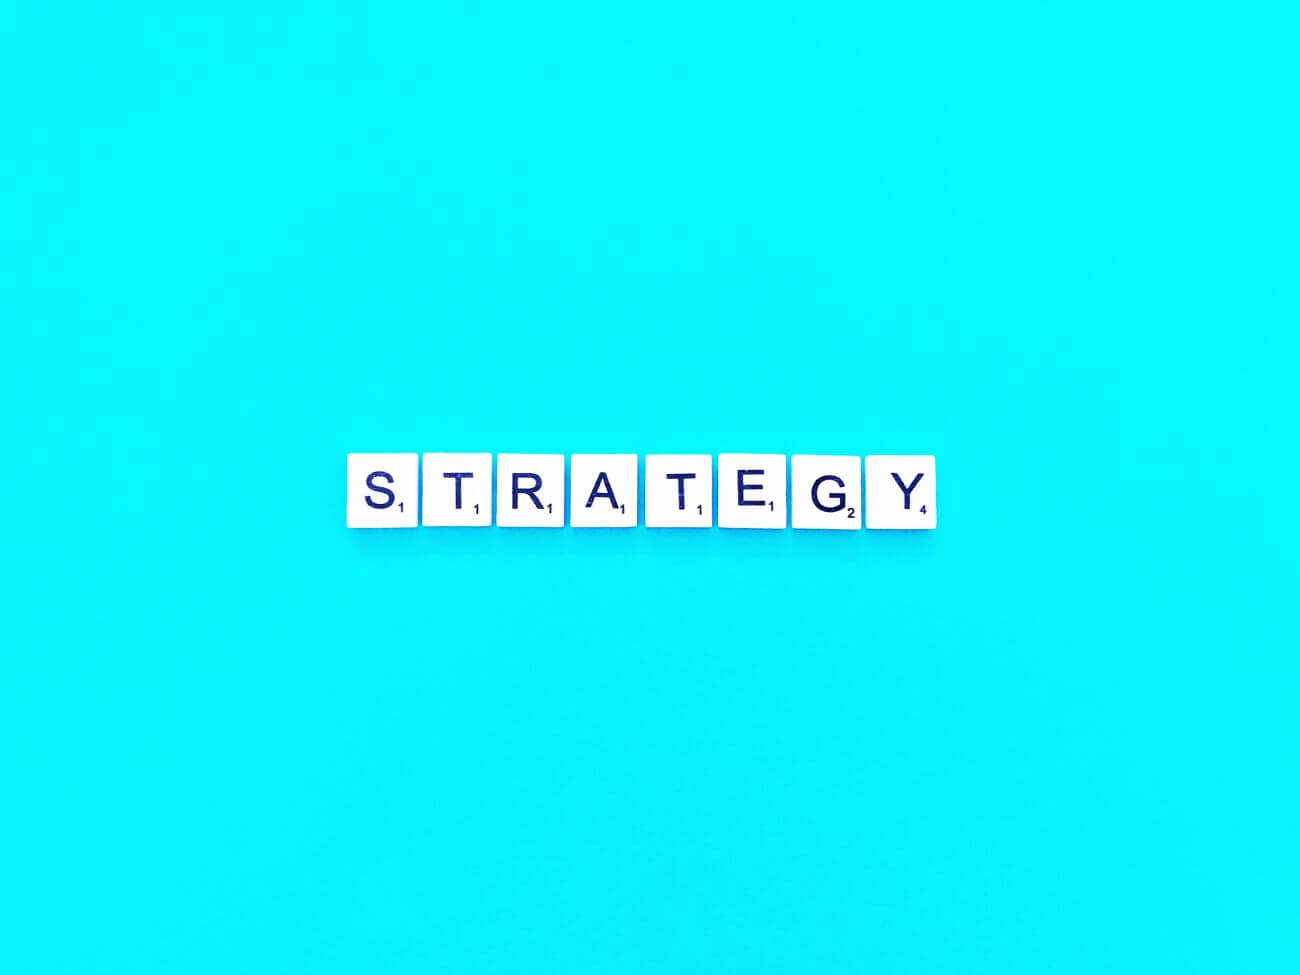 seo strategy